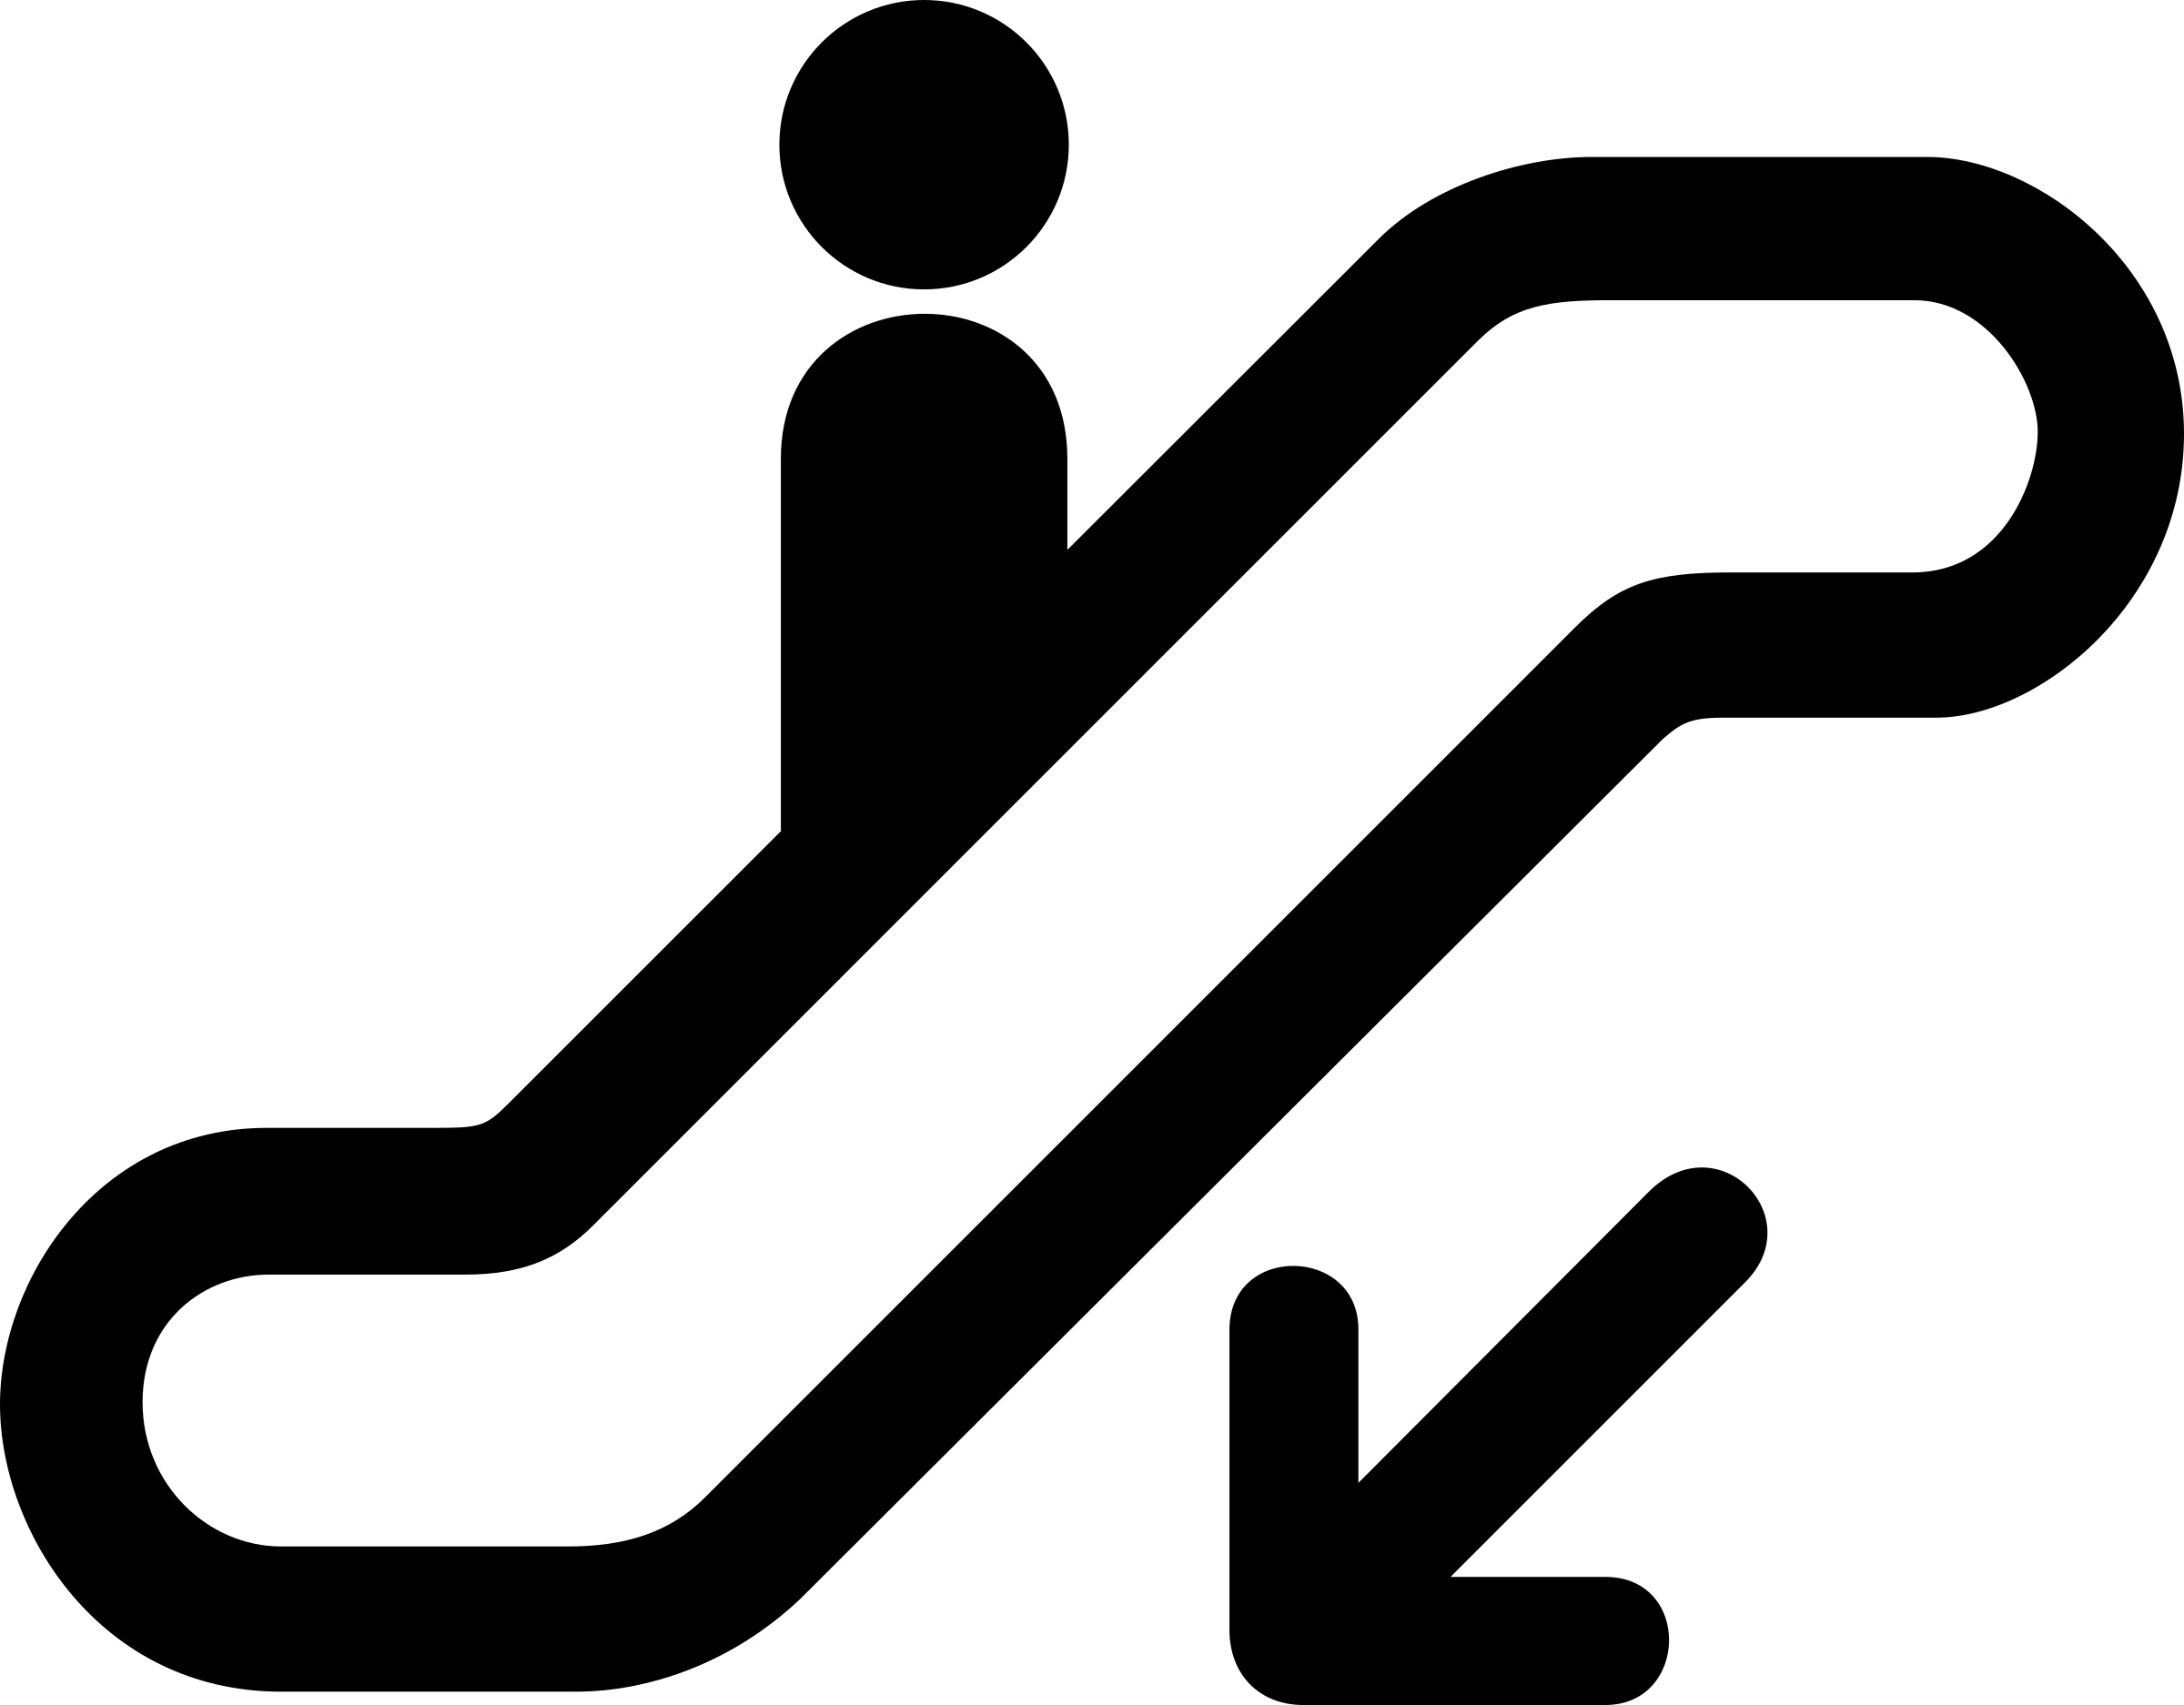 Escalator Down icons